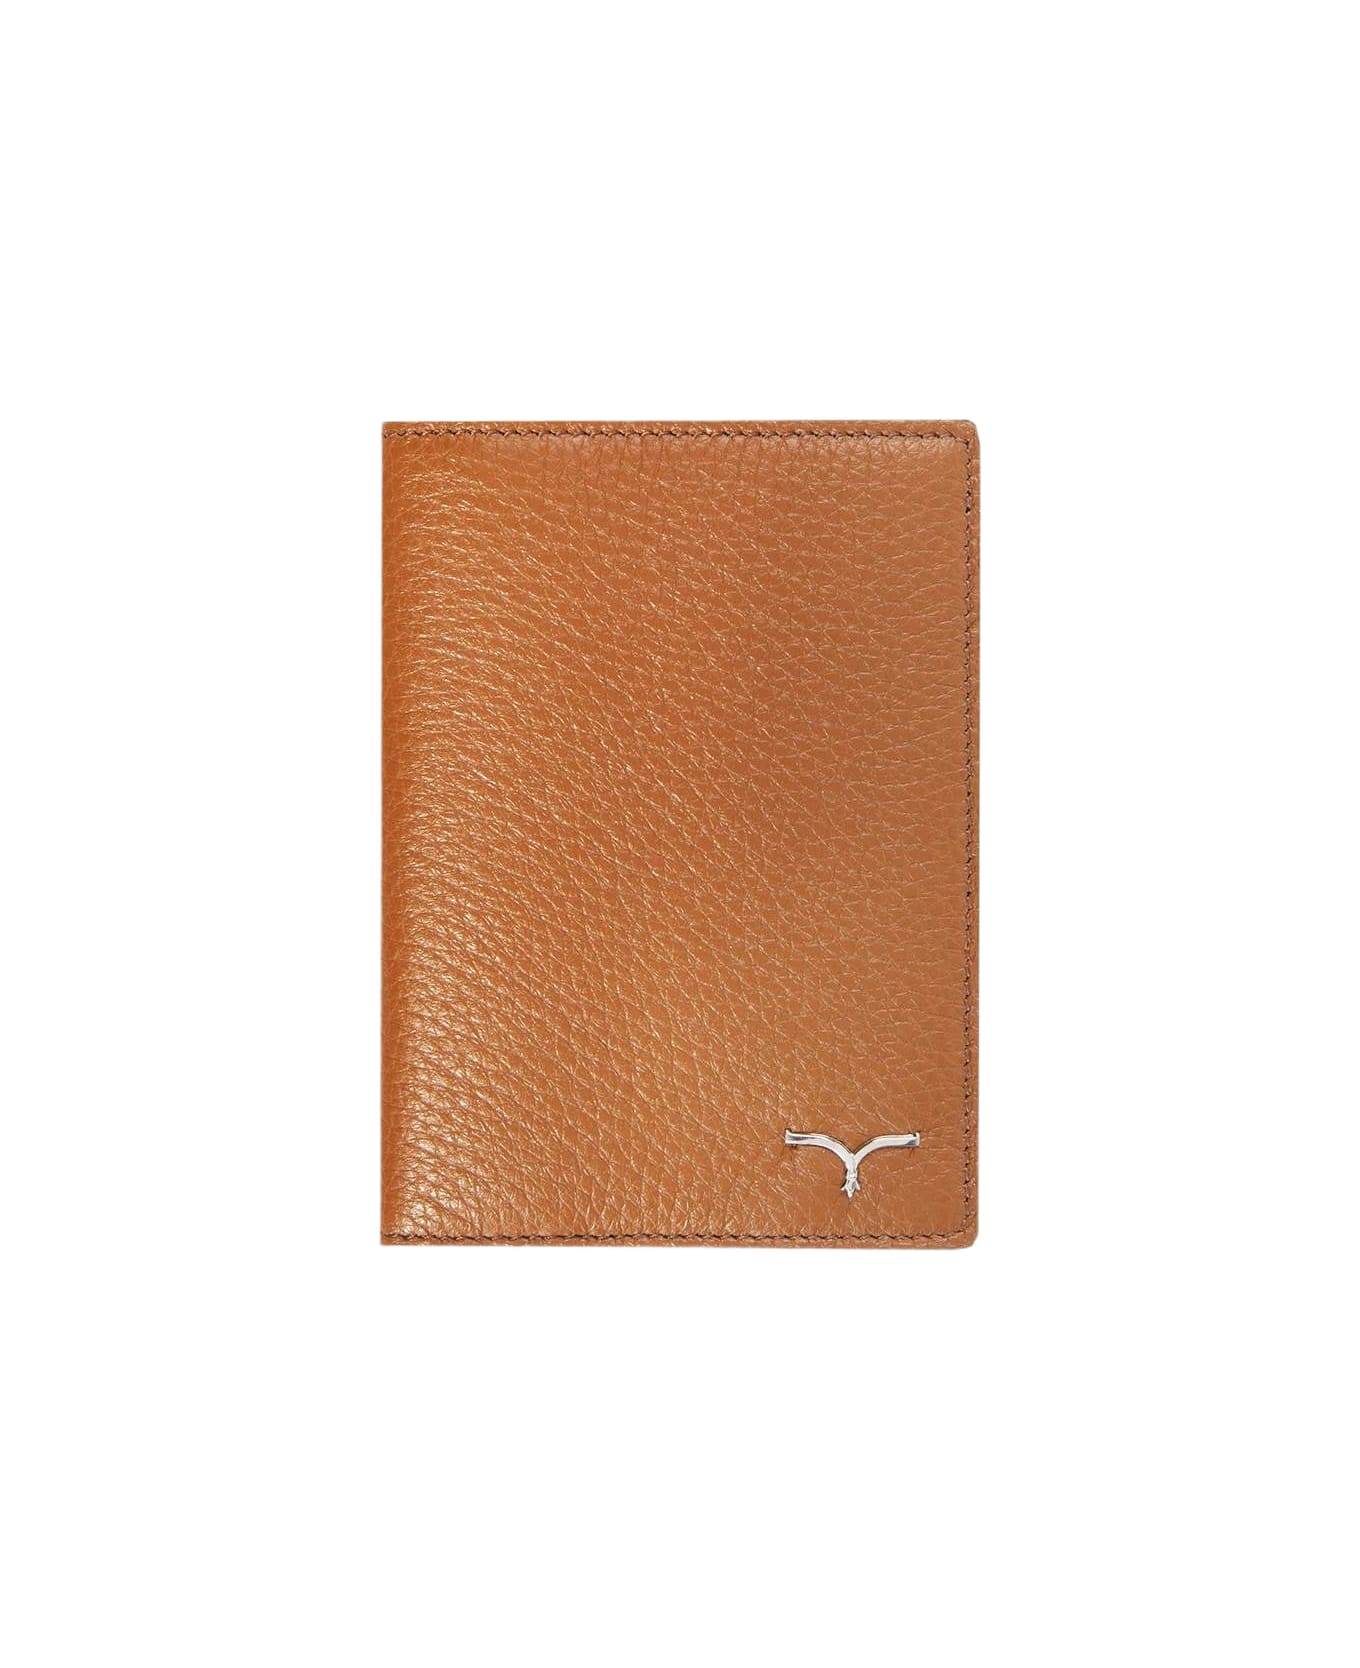 Larusmiani Passport Cover 'fiumicino' Wallet - Sienna 財布